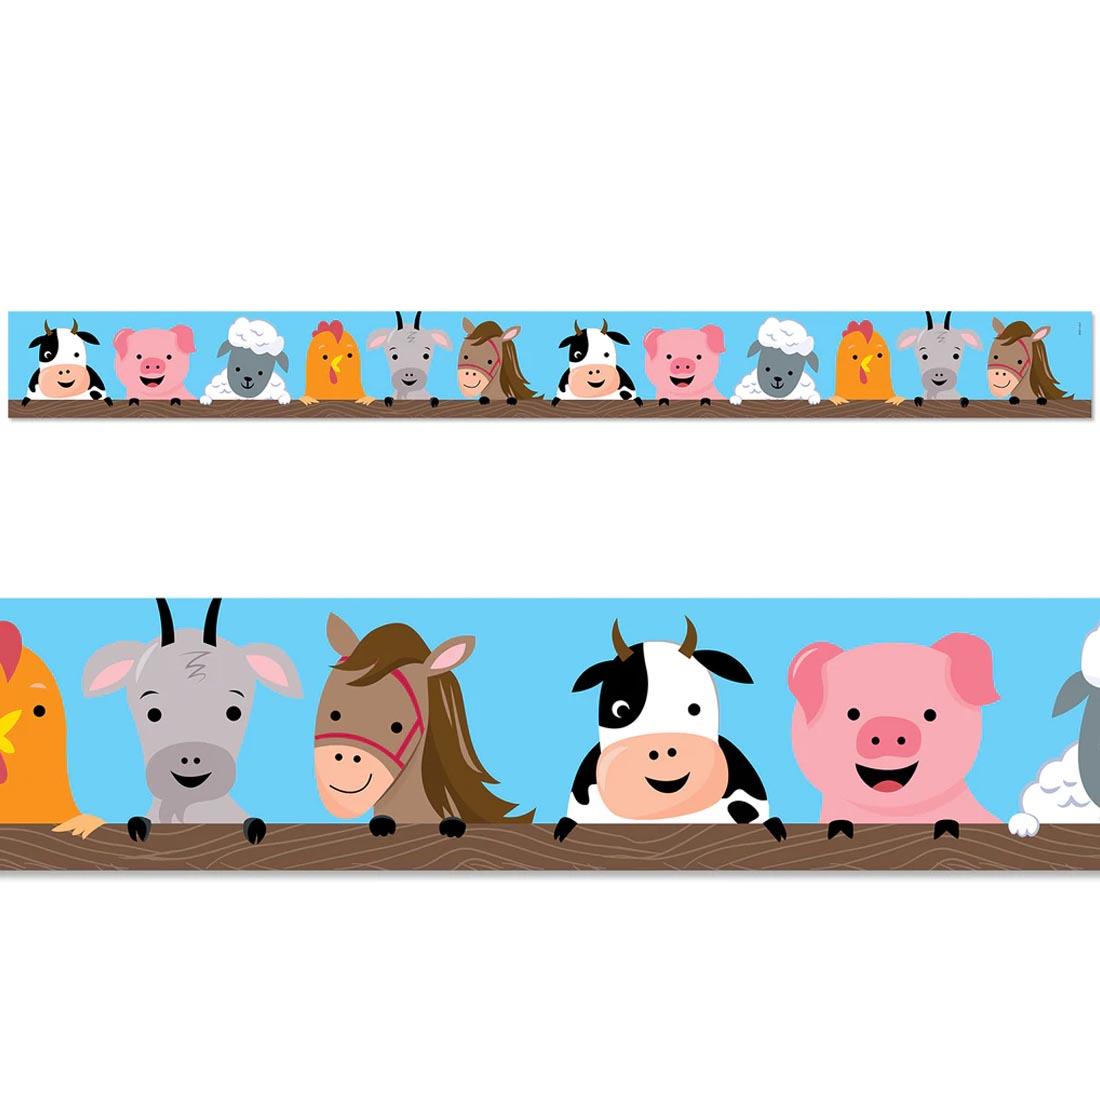 Farm Faces EZ Border By Creative Teaching Press, featuring cartoon faces of several animals peeking over a fence